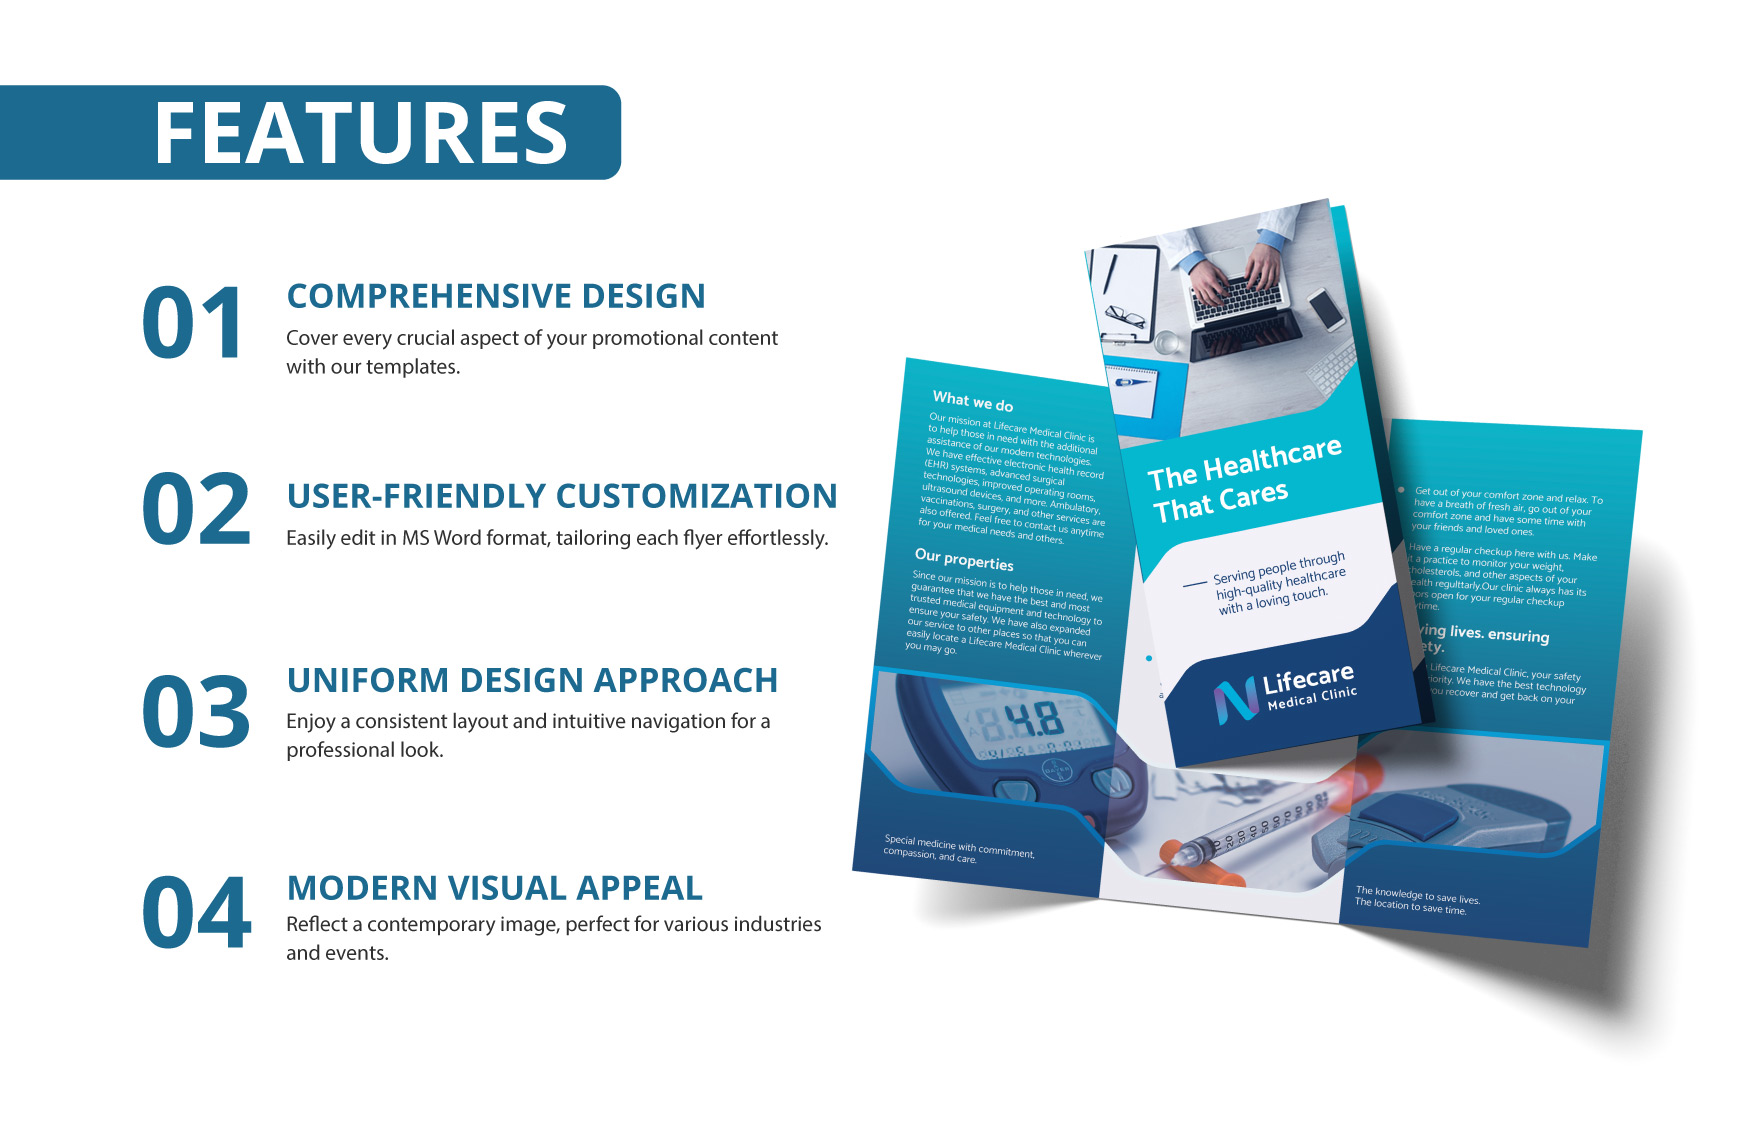 Clinic Tri-Fold Brochure Template